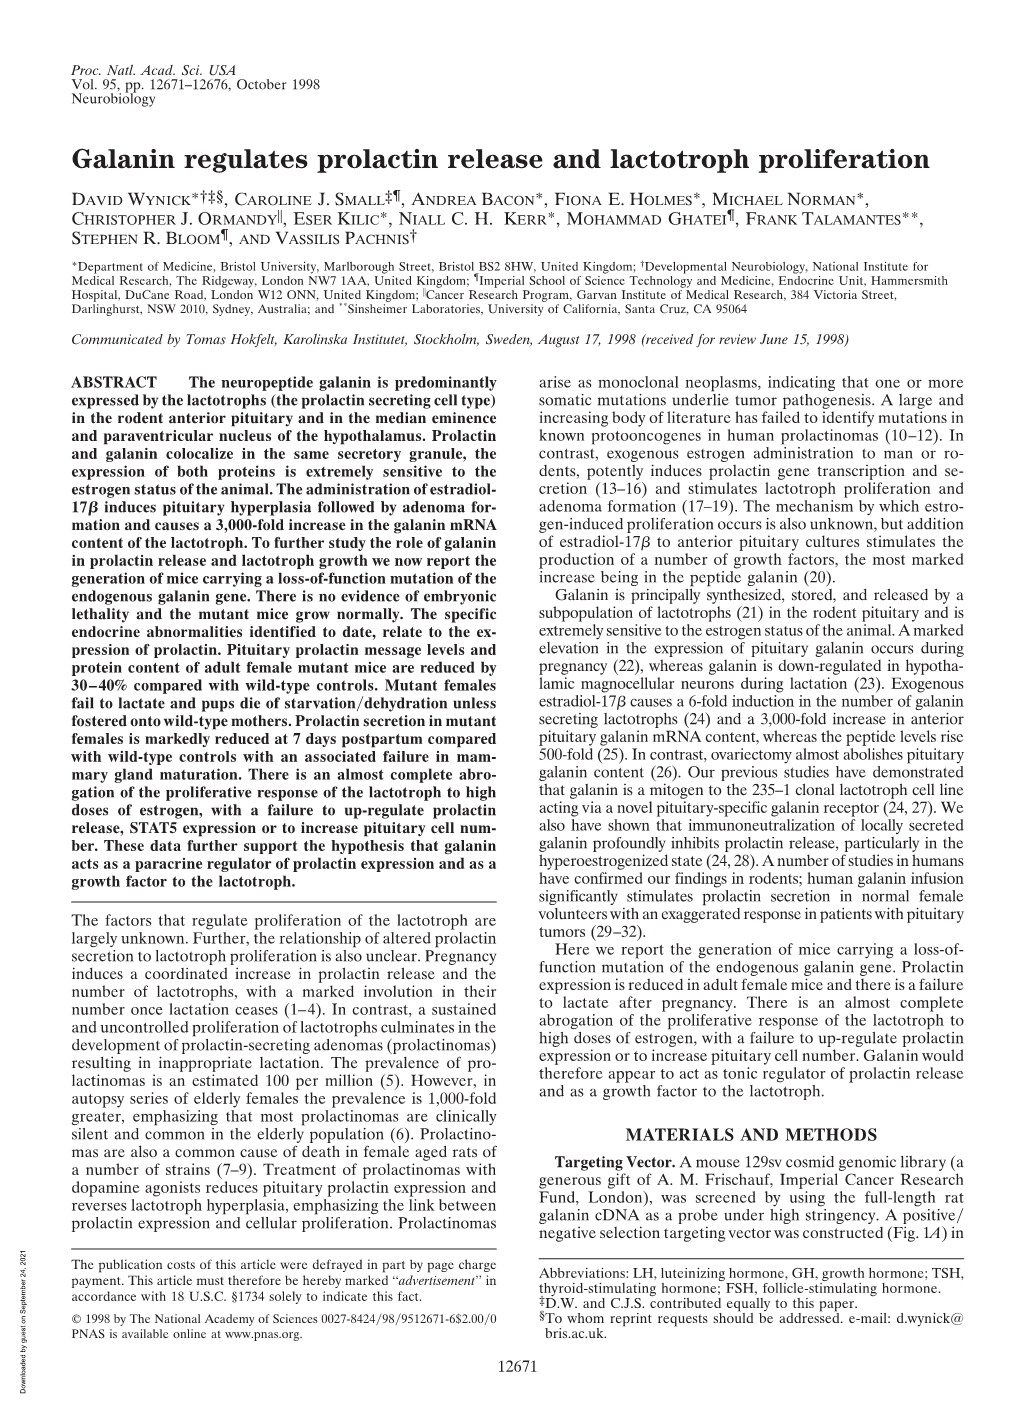 Galanin Regulates Prolactin Release and Lactotroph Proliferation